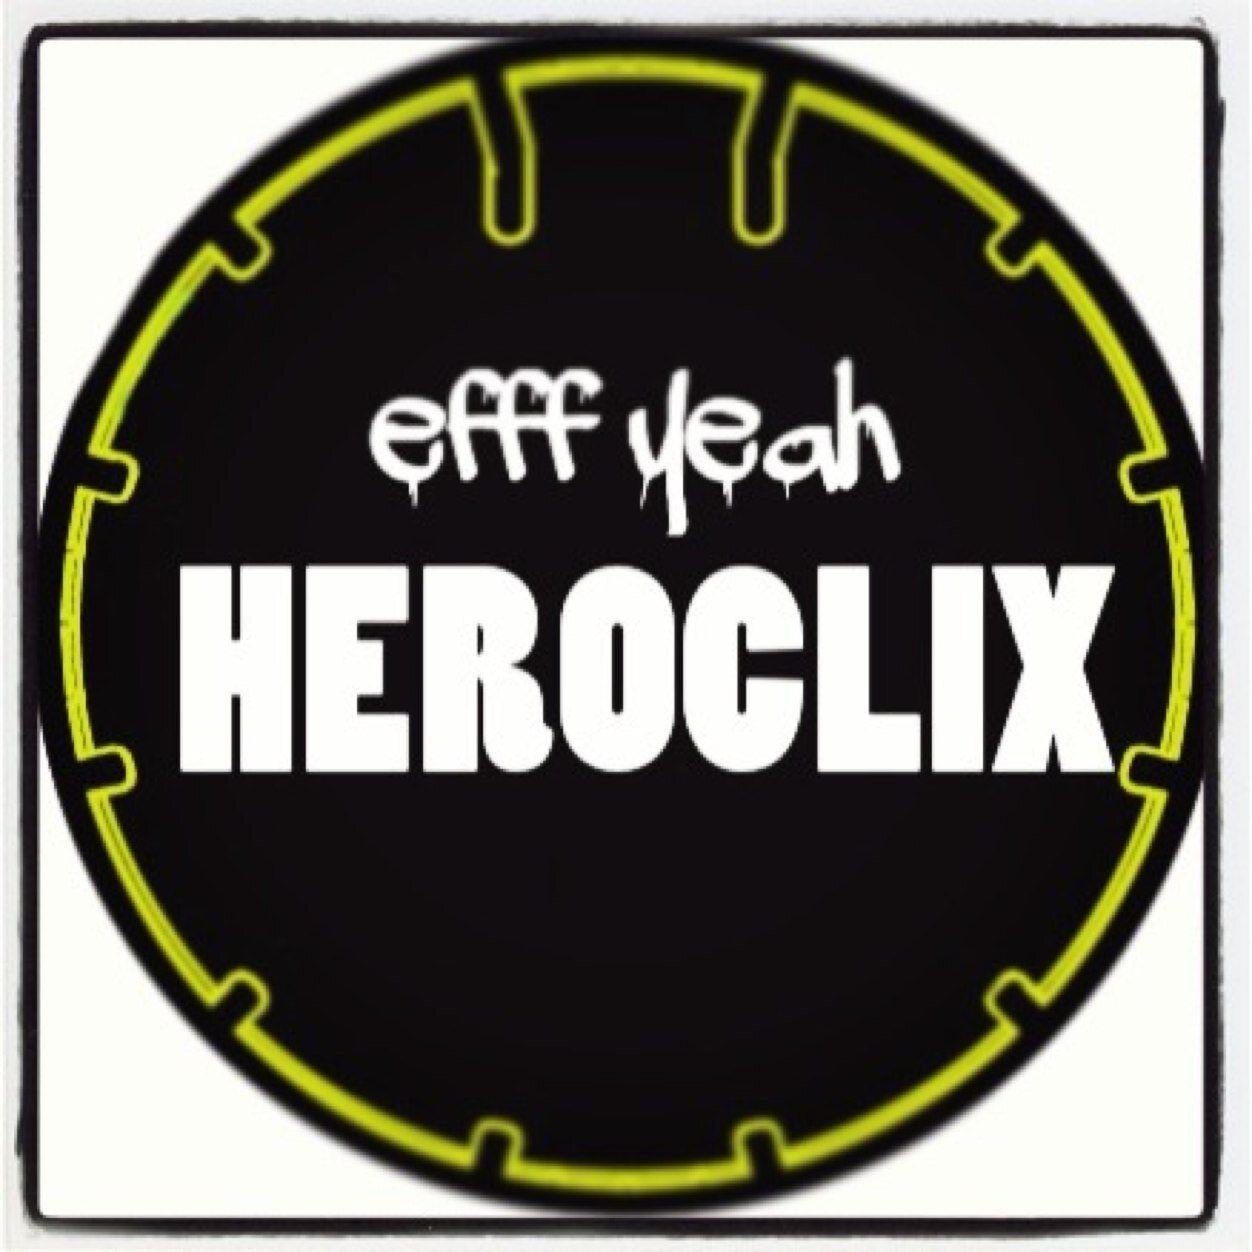 HeroClix Logo - Efff Yeah Heroclix! (@EffYeahHeroclix) | Twitter